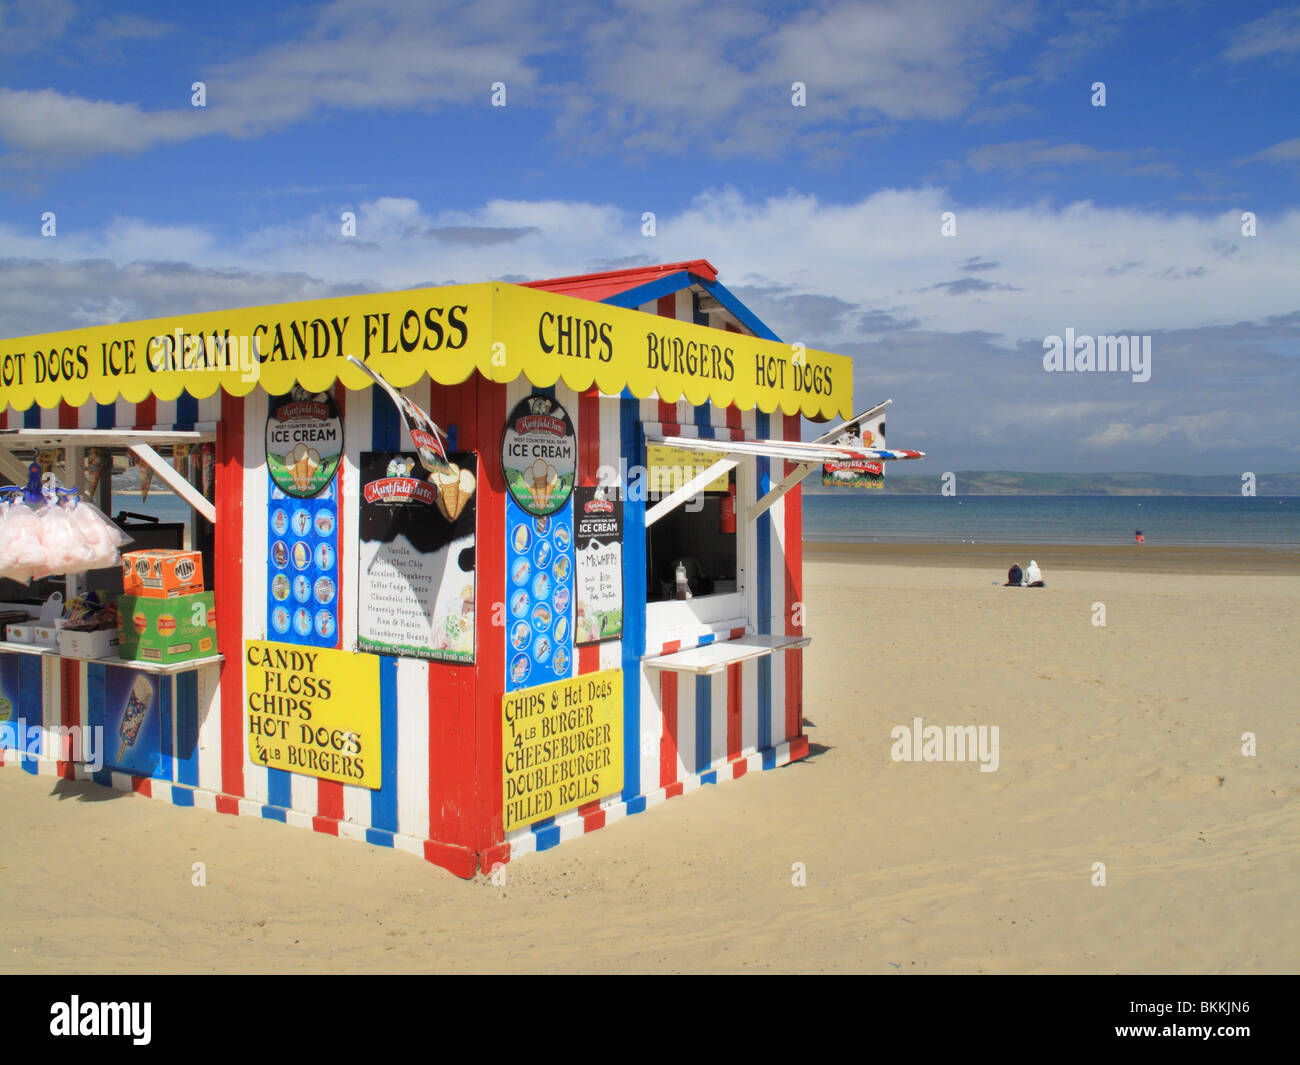 Beach Ice cream parlor cafe weymouth bay Stock Photo